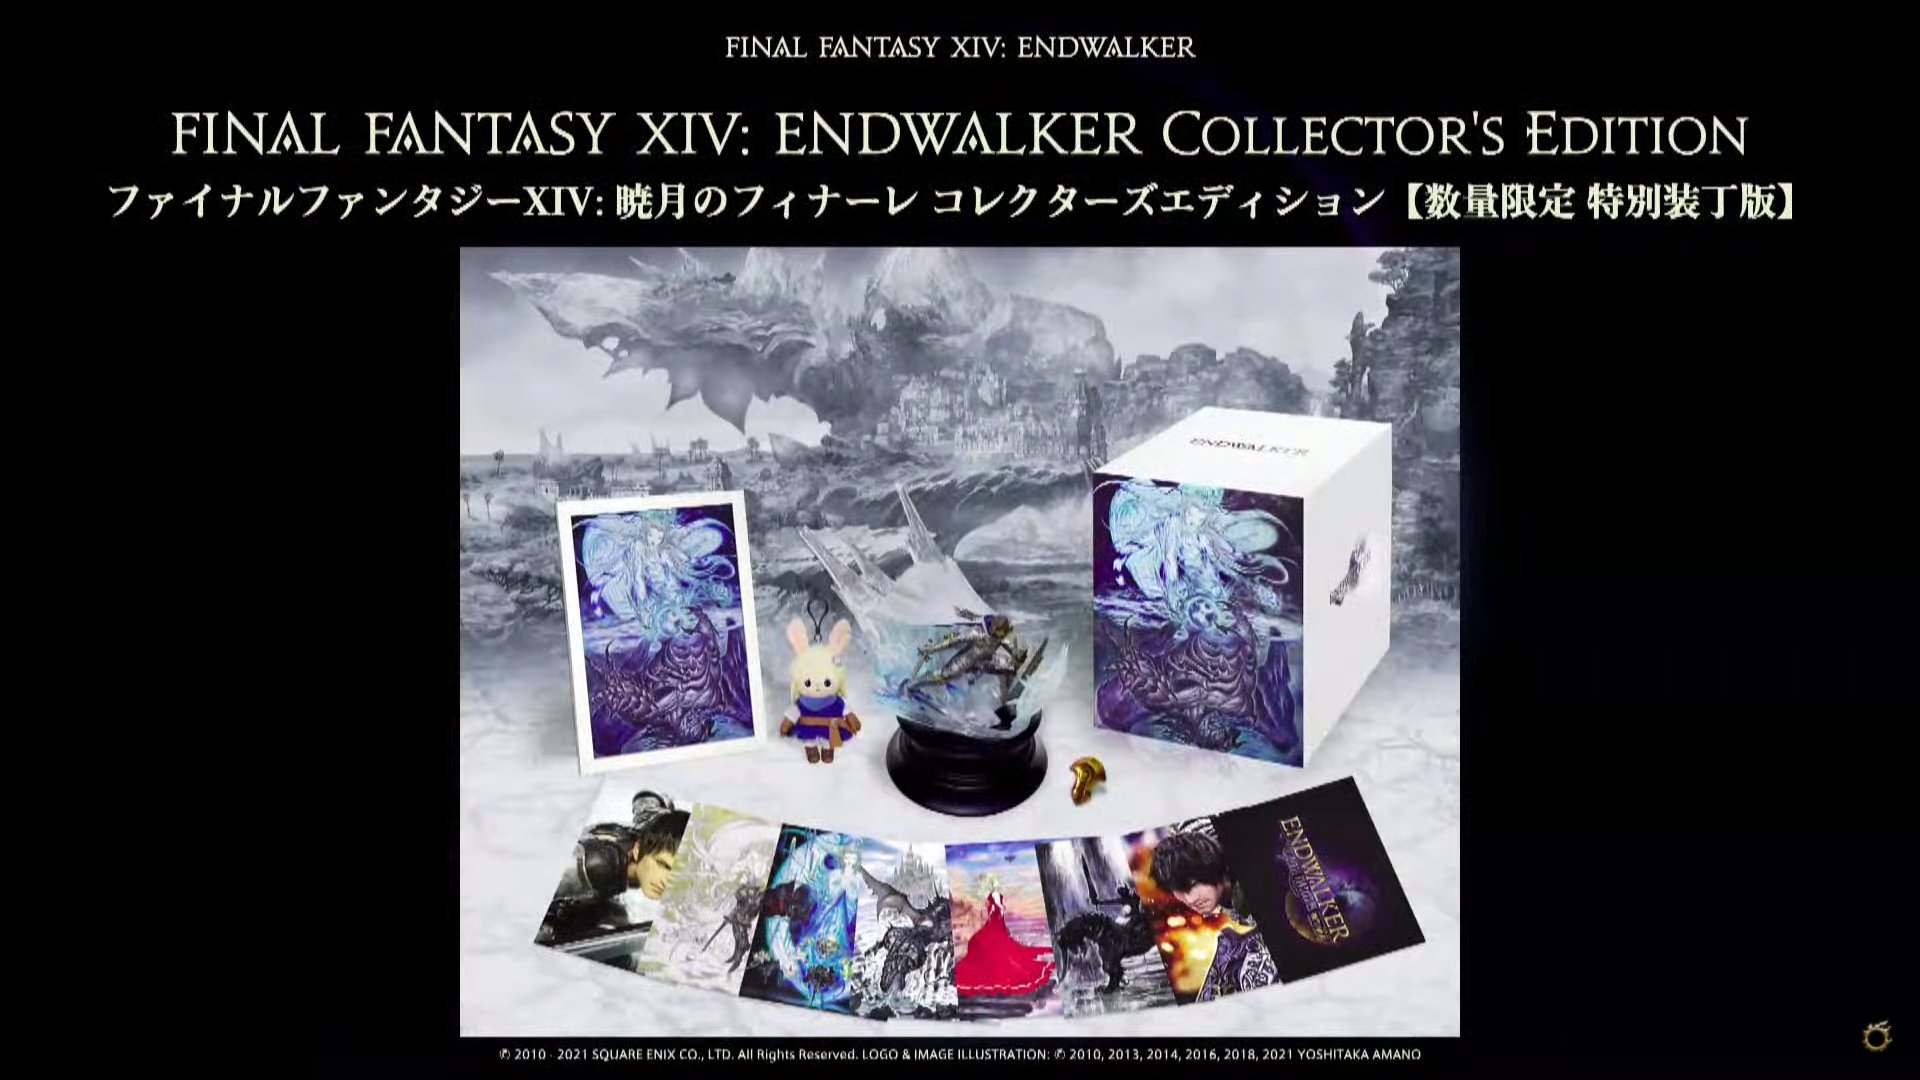 FFXIV 6.0 Endwalker: Collector's Edition